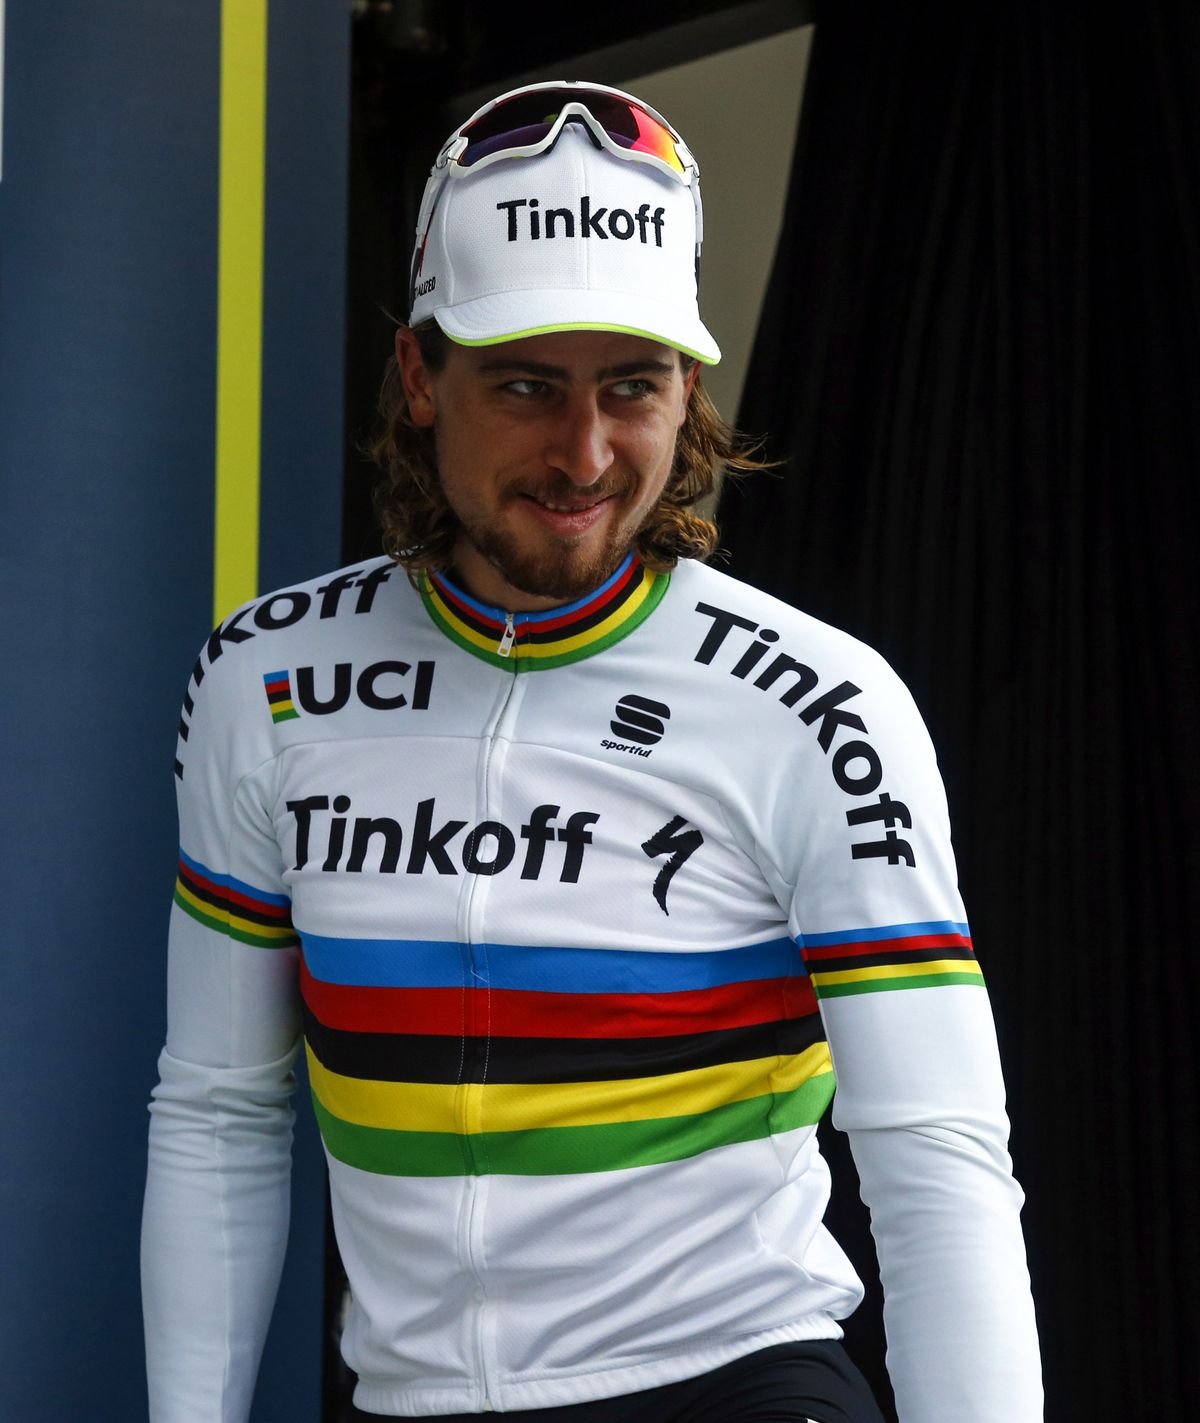 Milan-San Remo: Sagan confident the victories will come | Cyclingnews